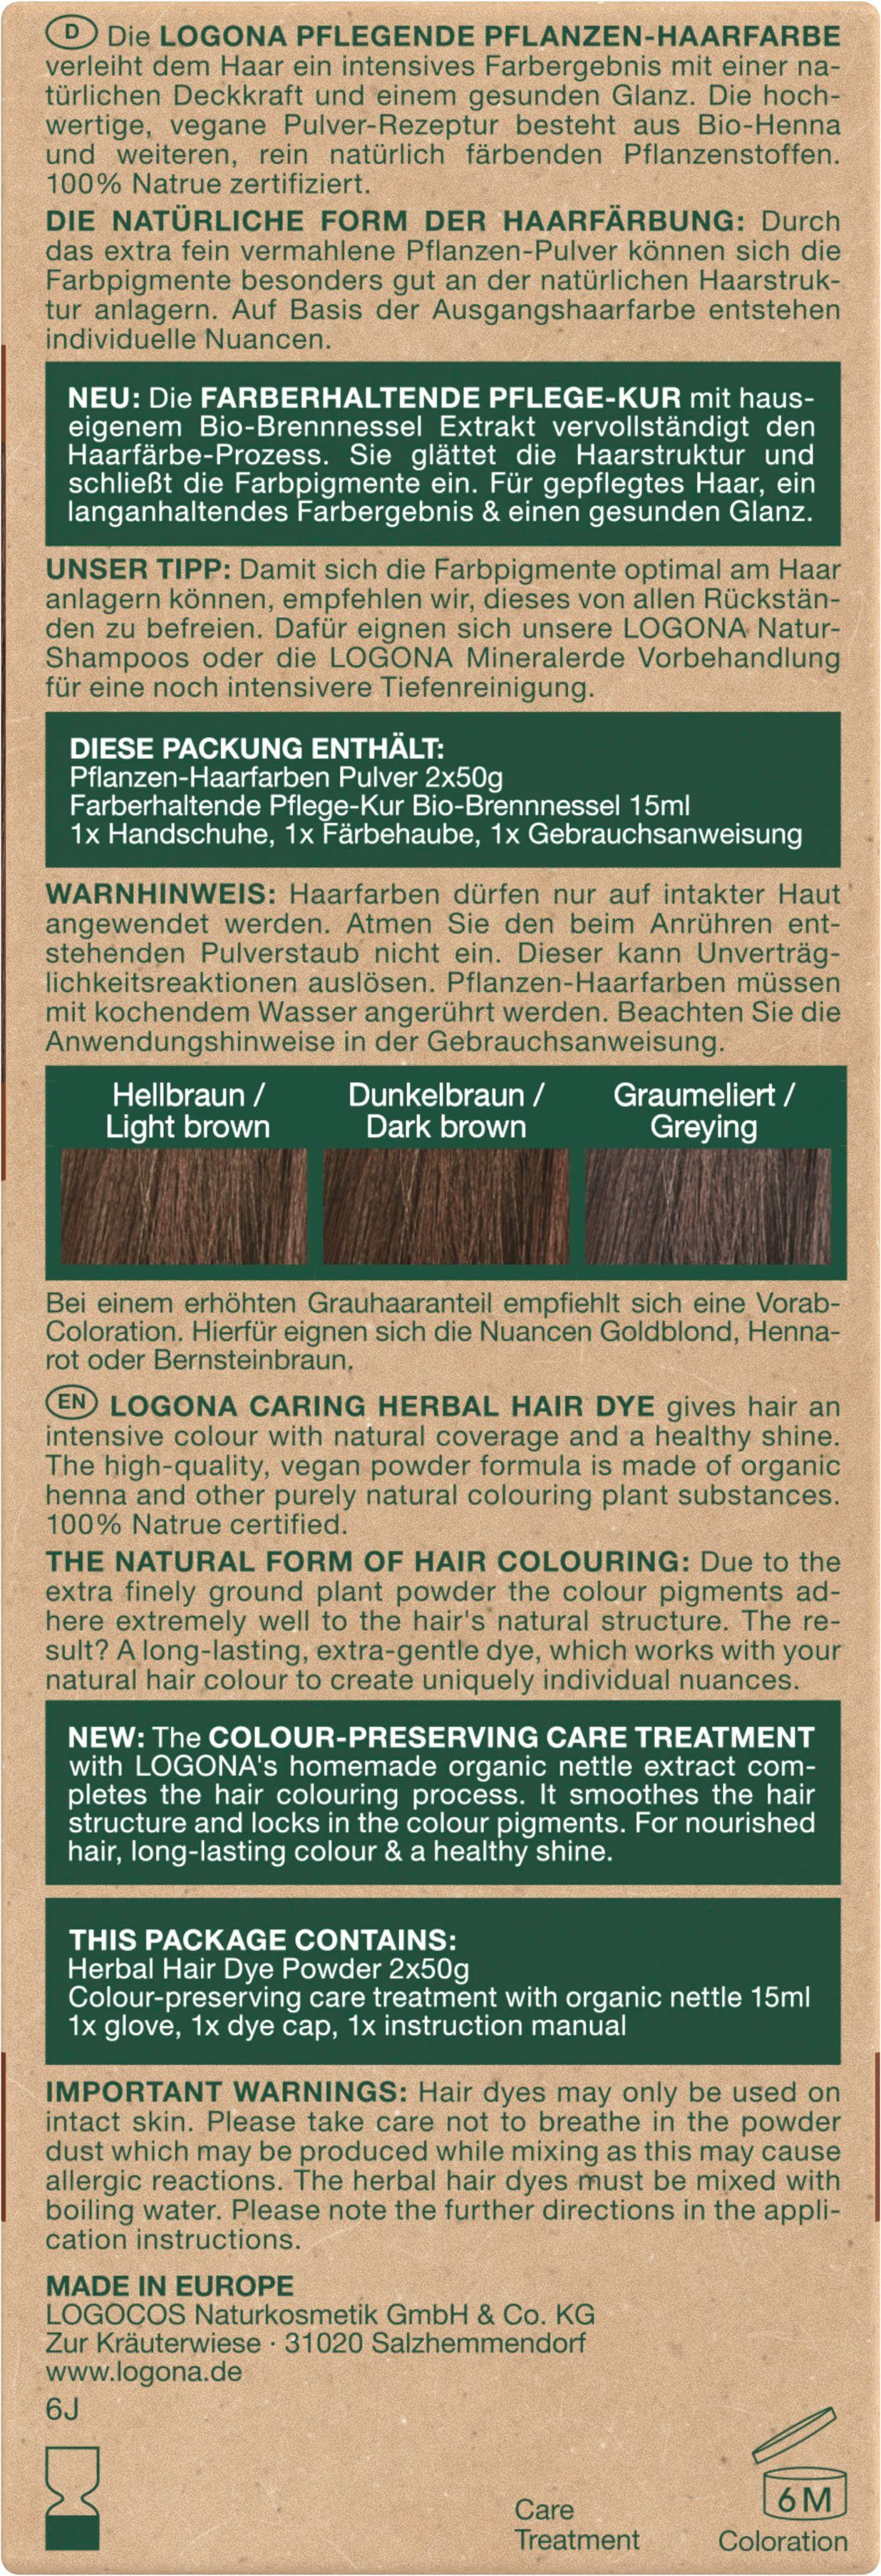 Pflanzen-Haarfarbe LOGONA 09 Haarfarbe Schokobraun Pulver